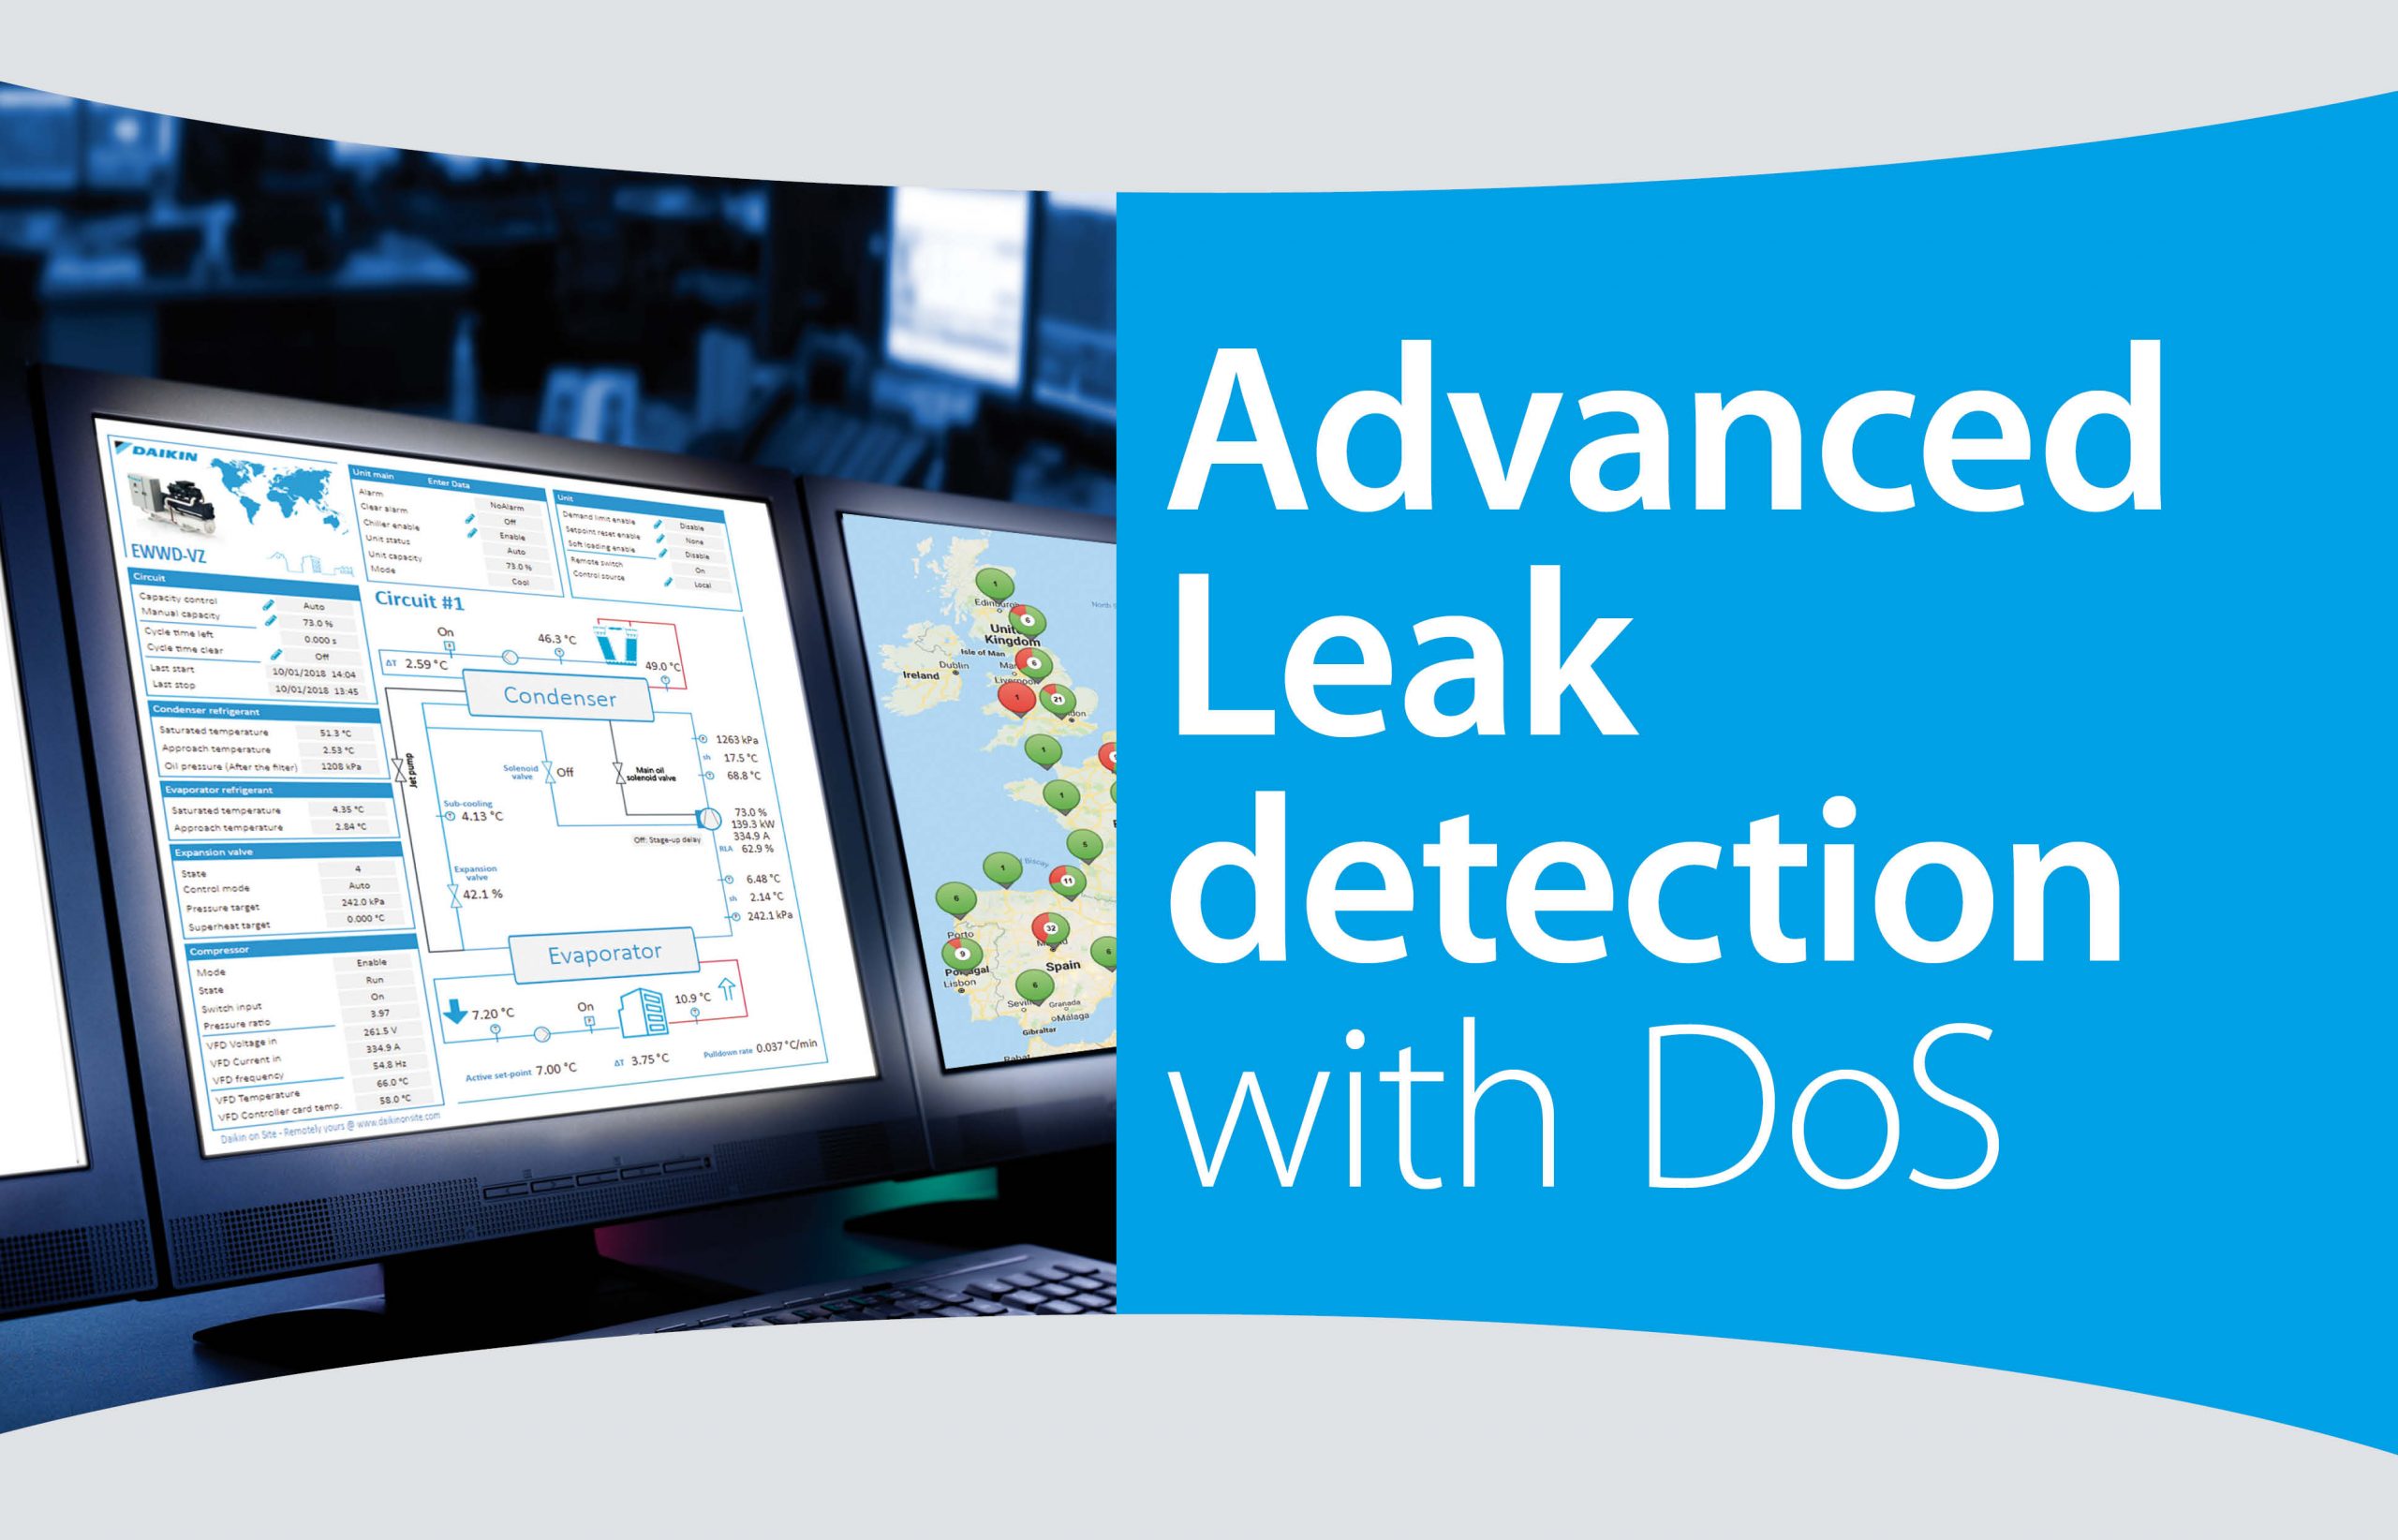 Advanced leak detection with Daikin remote monitoring